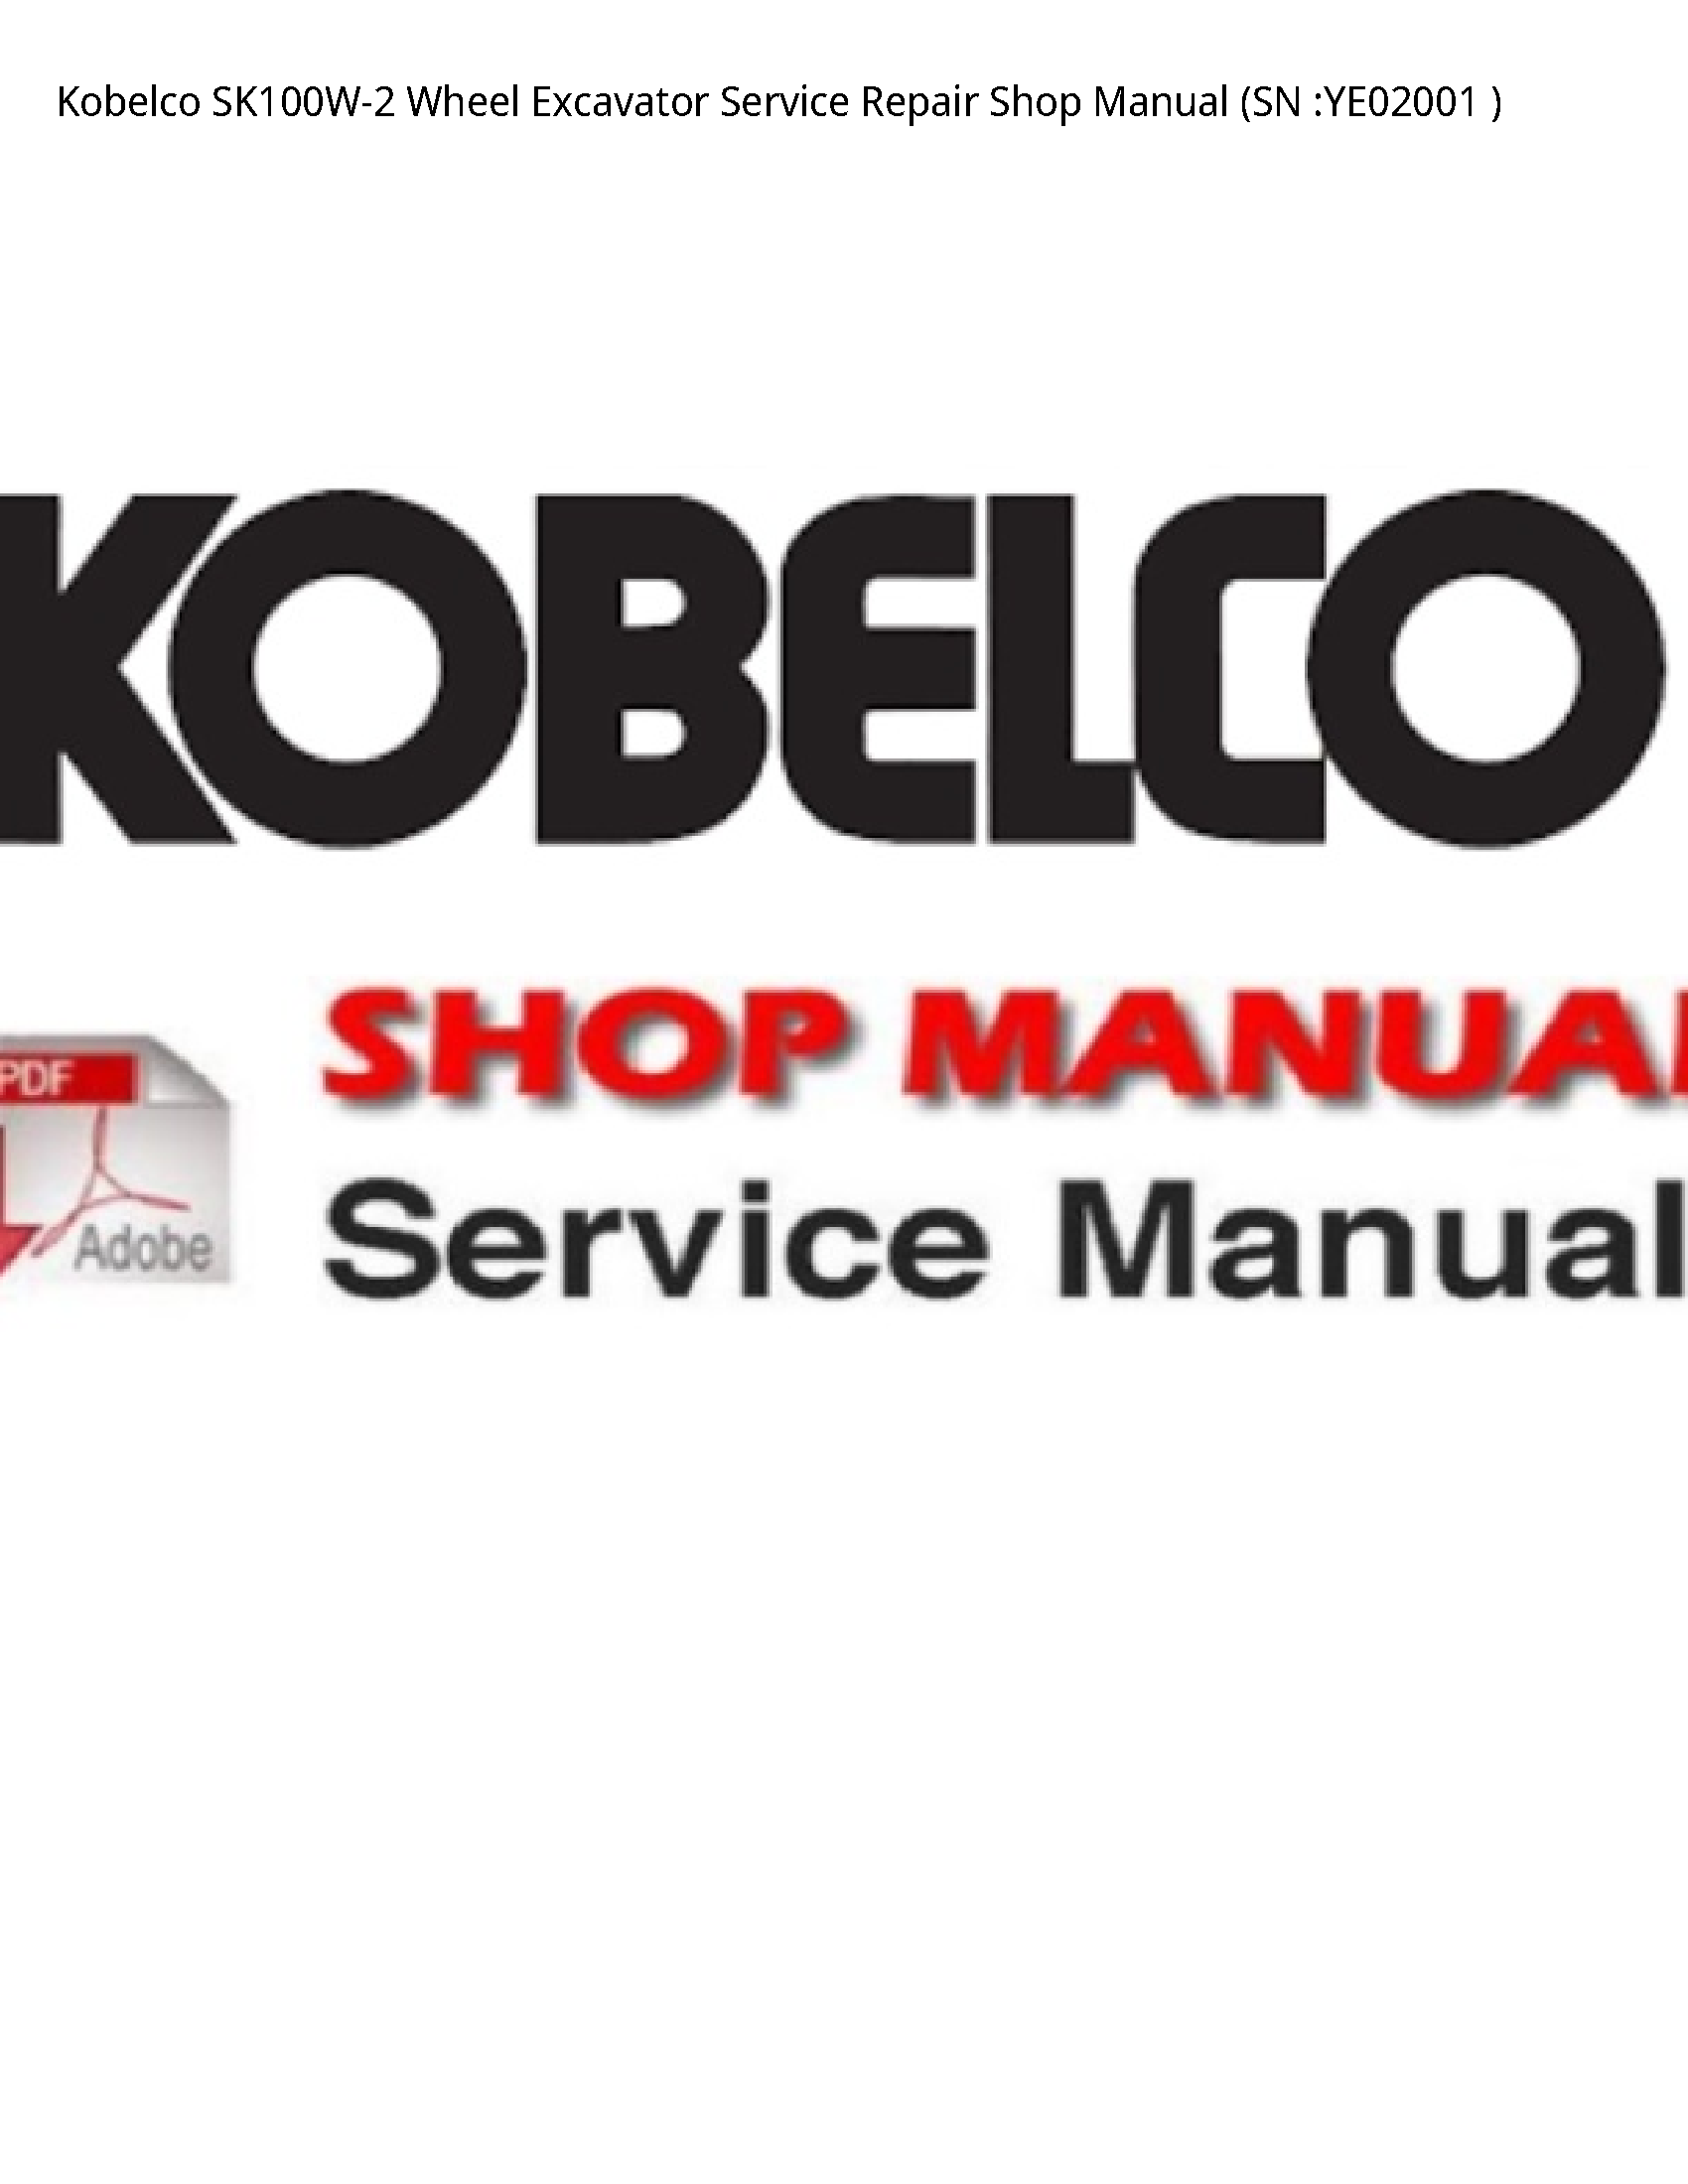 Kobelco SK100W-2 Wheel Excavator manual